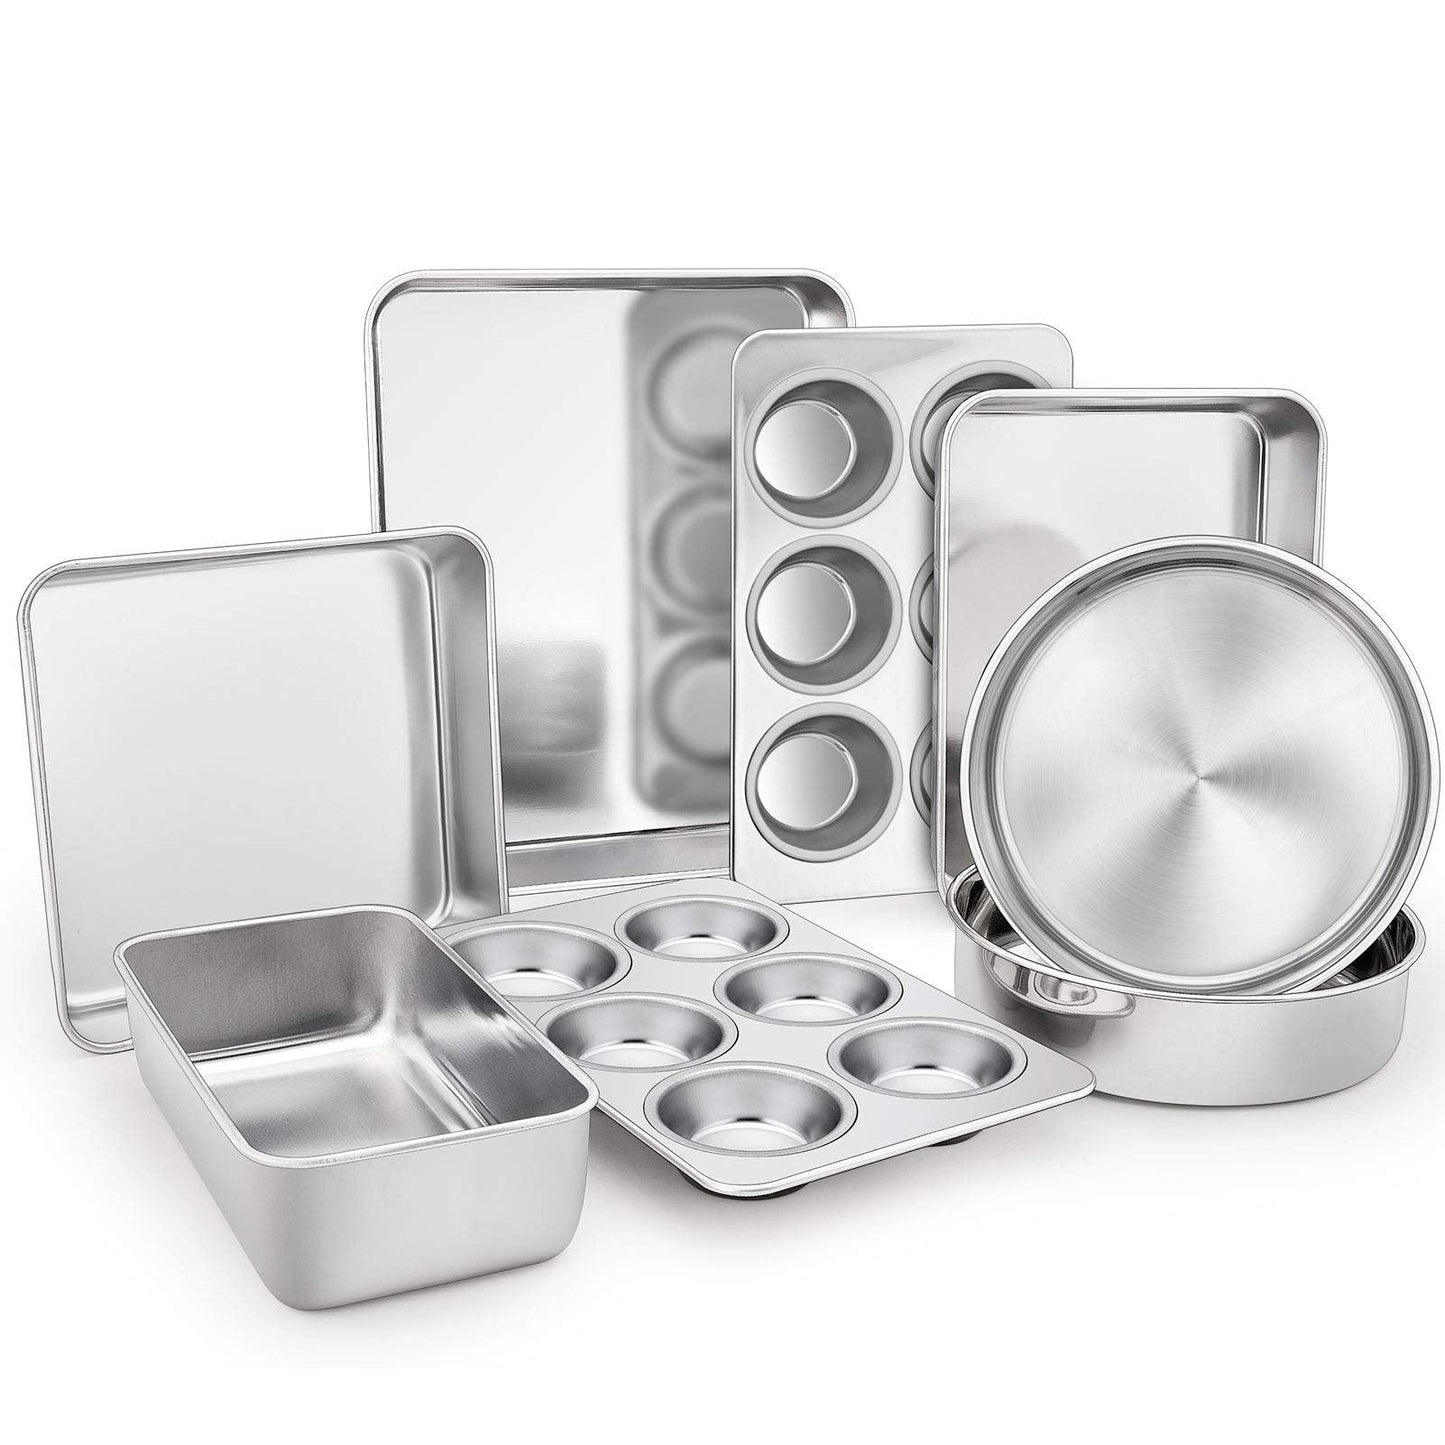 TeamFar Stainless Steel Bakeware Set of 8, Baking Roasting Toaster Oven Pans, Lasagna/Square/Round Cake Pan, Loaf Pan & Muffin Pan, Non-Toxic & Durable, Smooth & Dishwasher Safe - CookCave